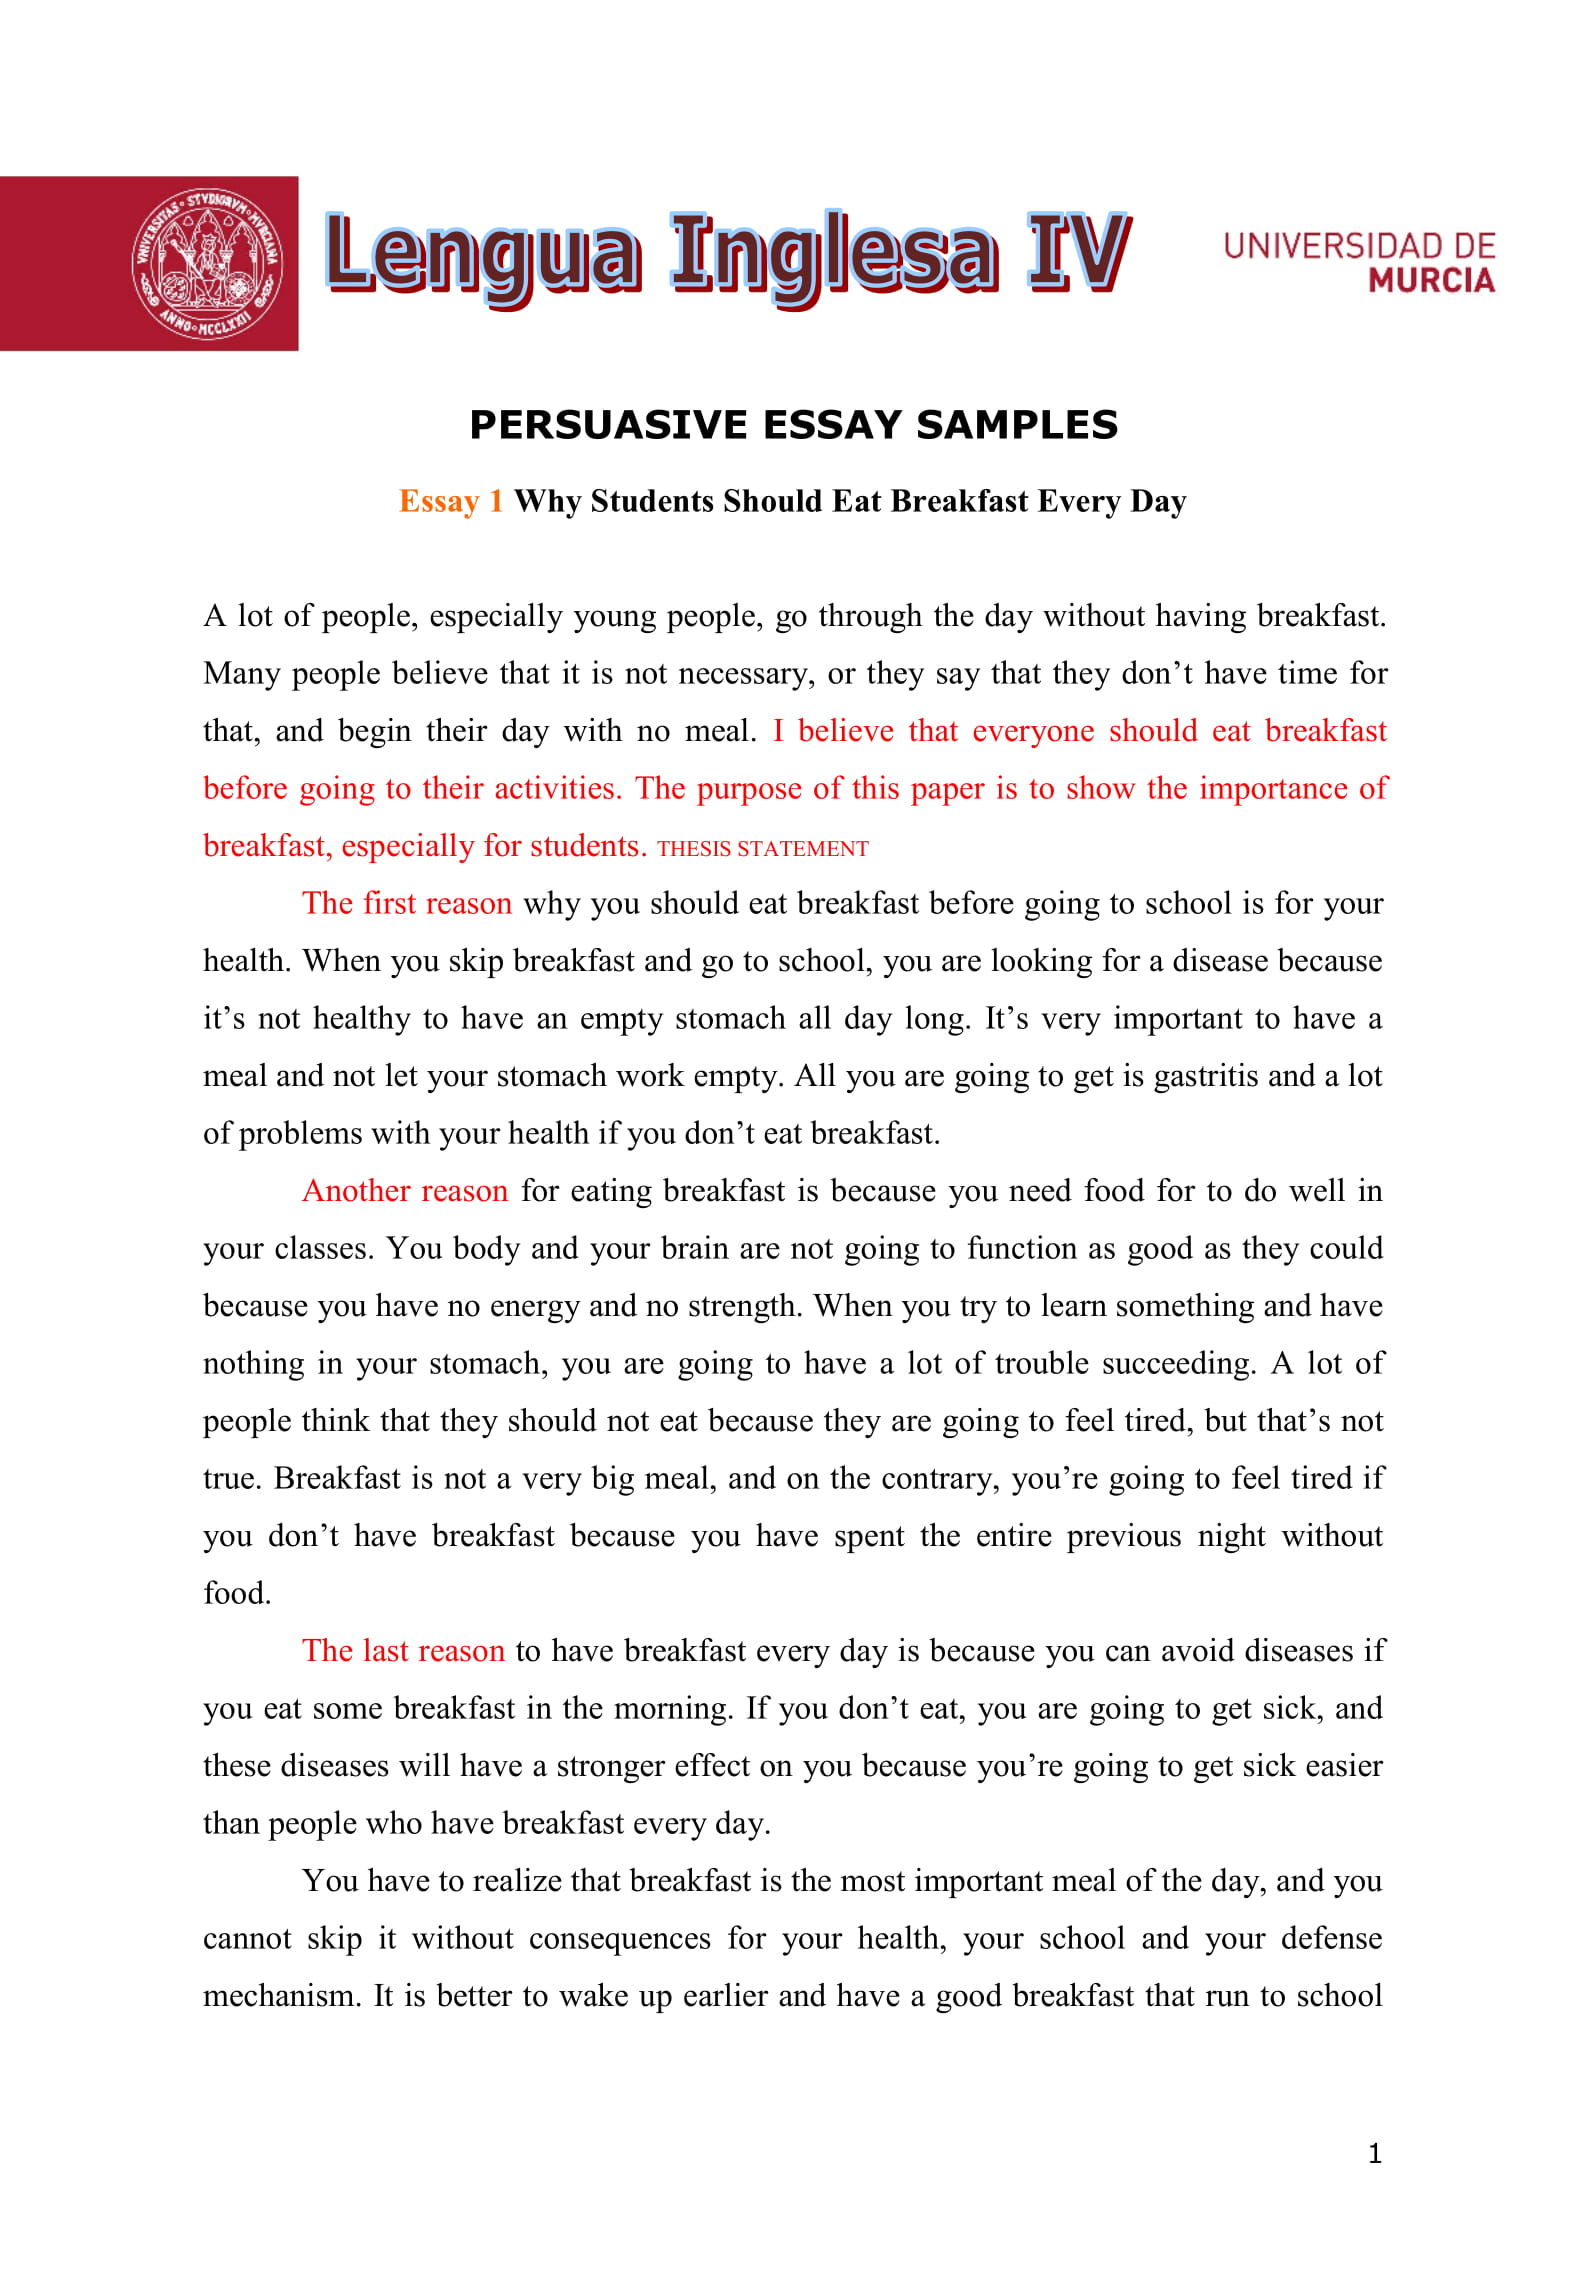 Introduction for an argumentative essay